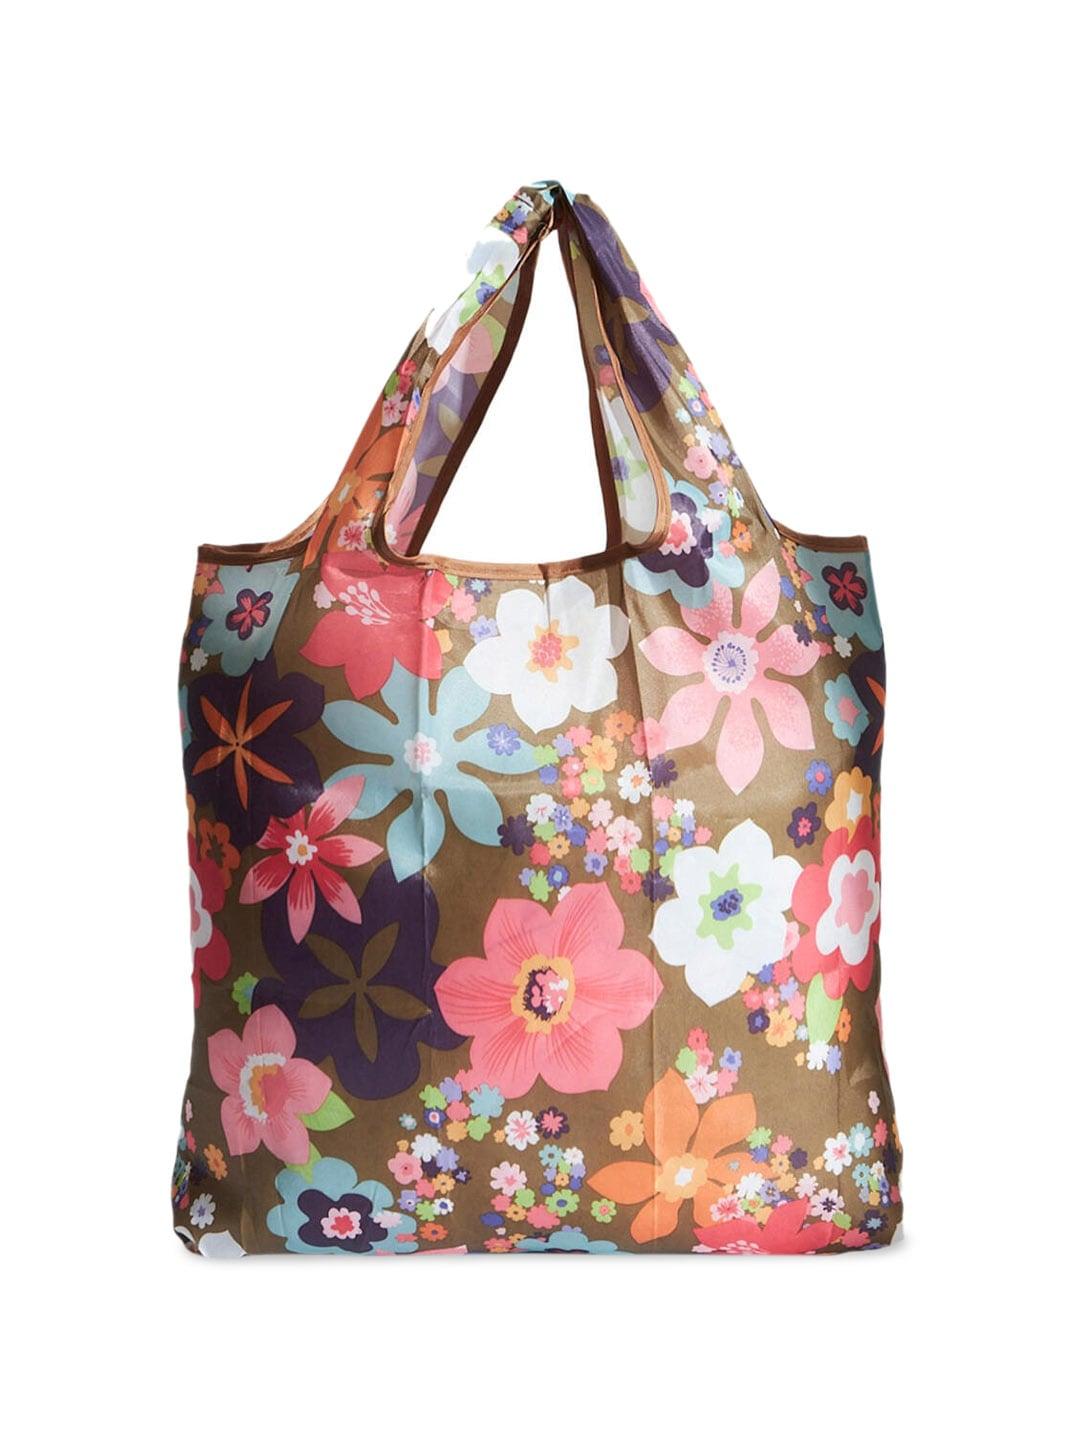 teal-by-chumbak-floral-printed-shopper-tote-bag